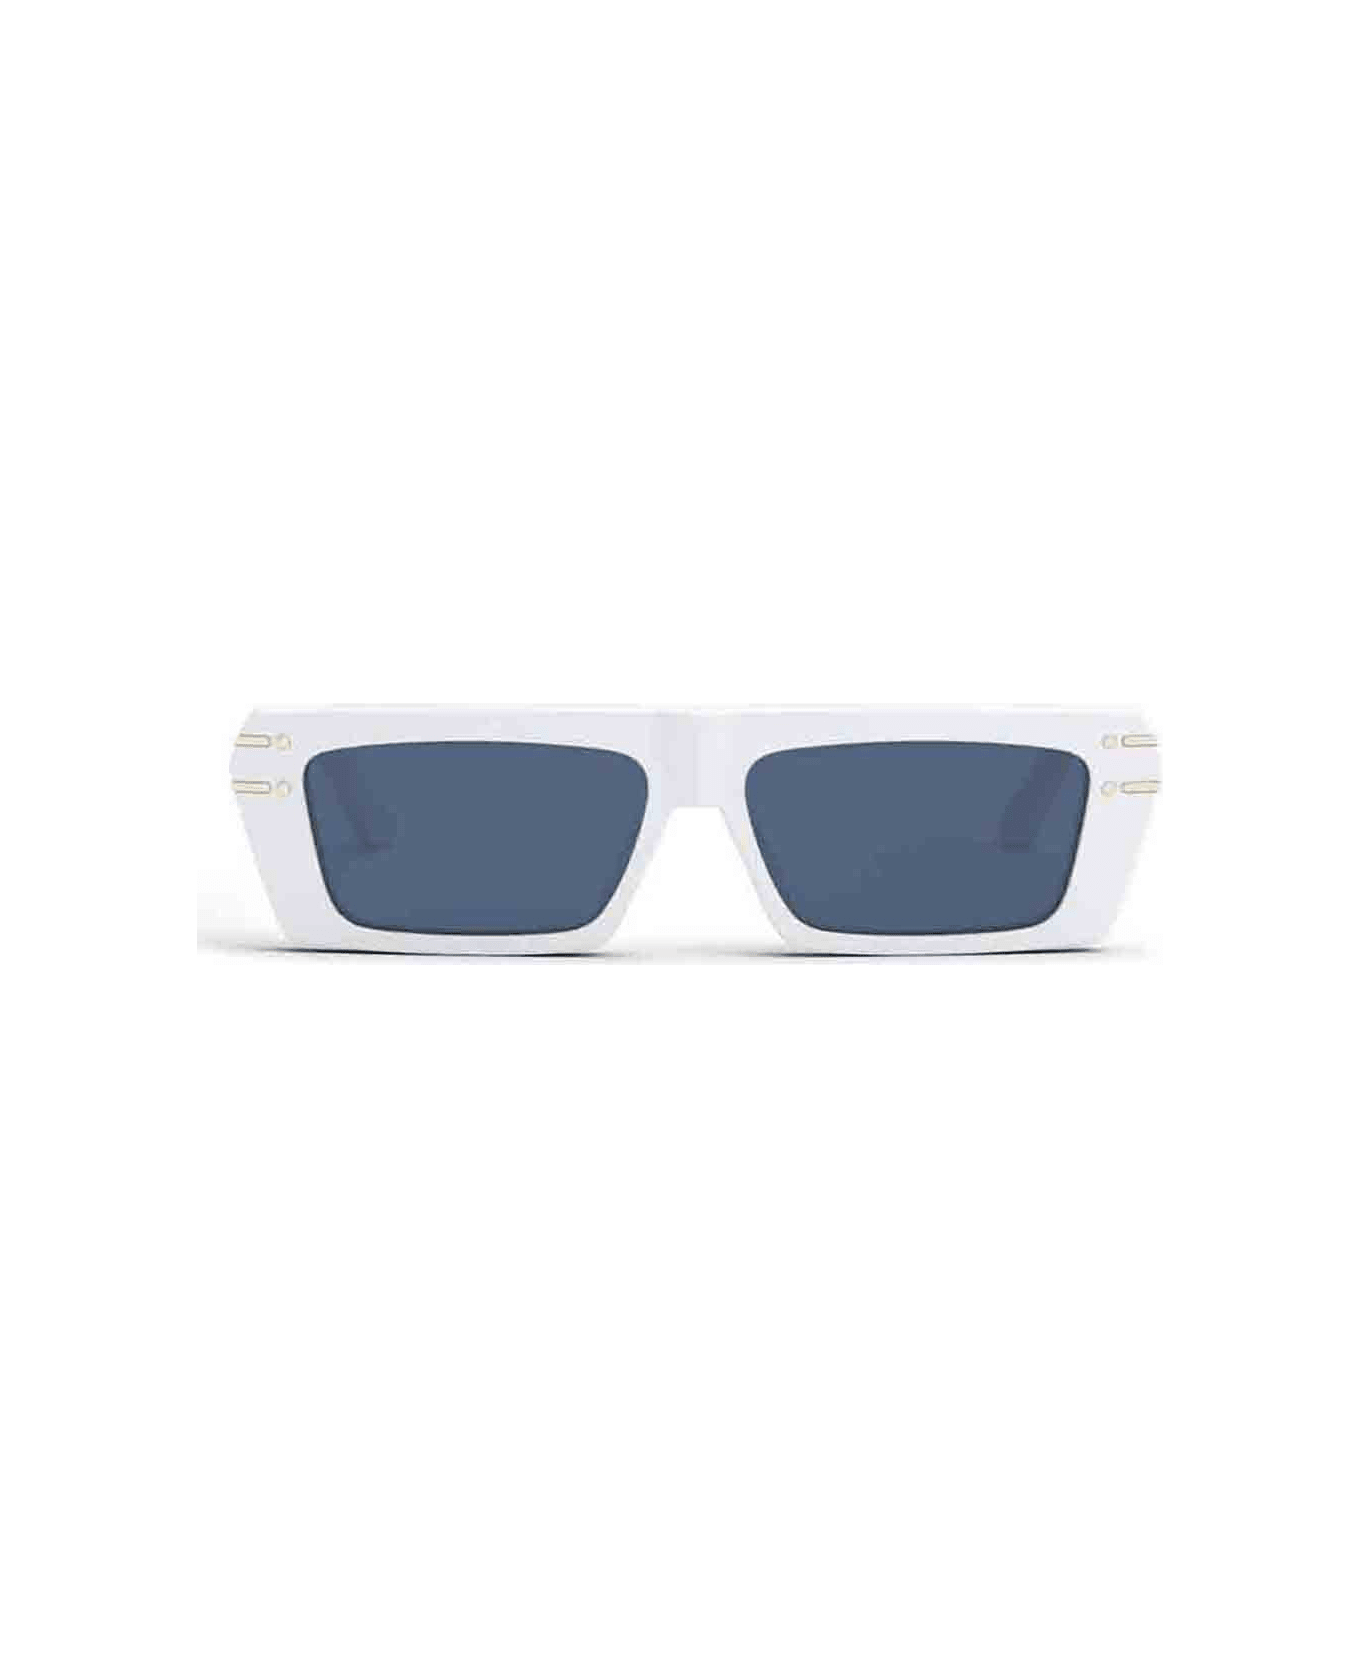 Dior Eyewear Sunglasses - Bianco/Blu